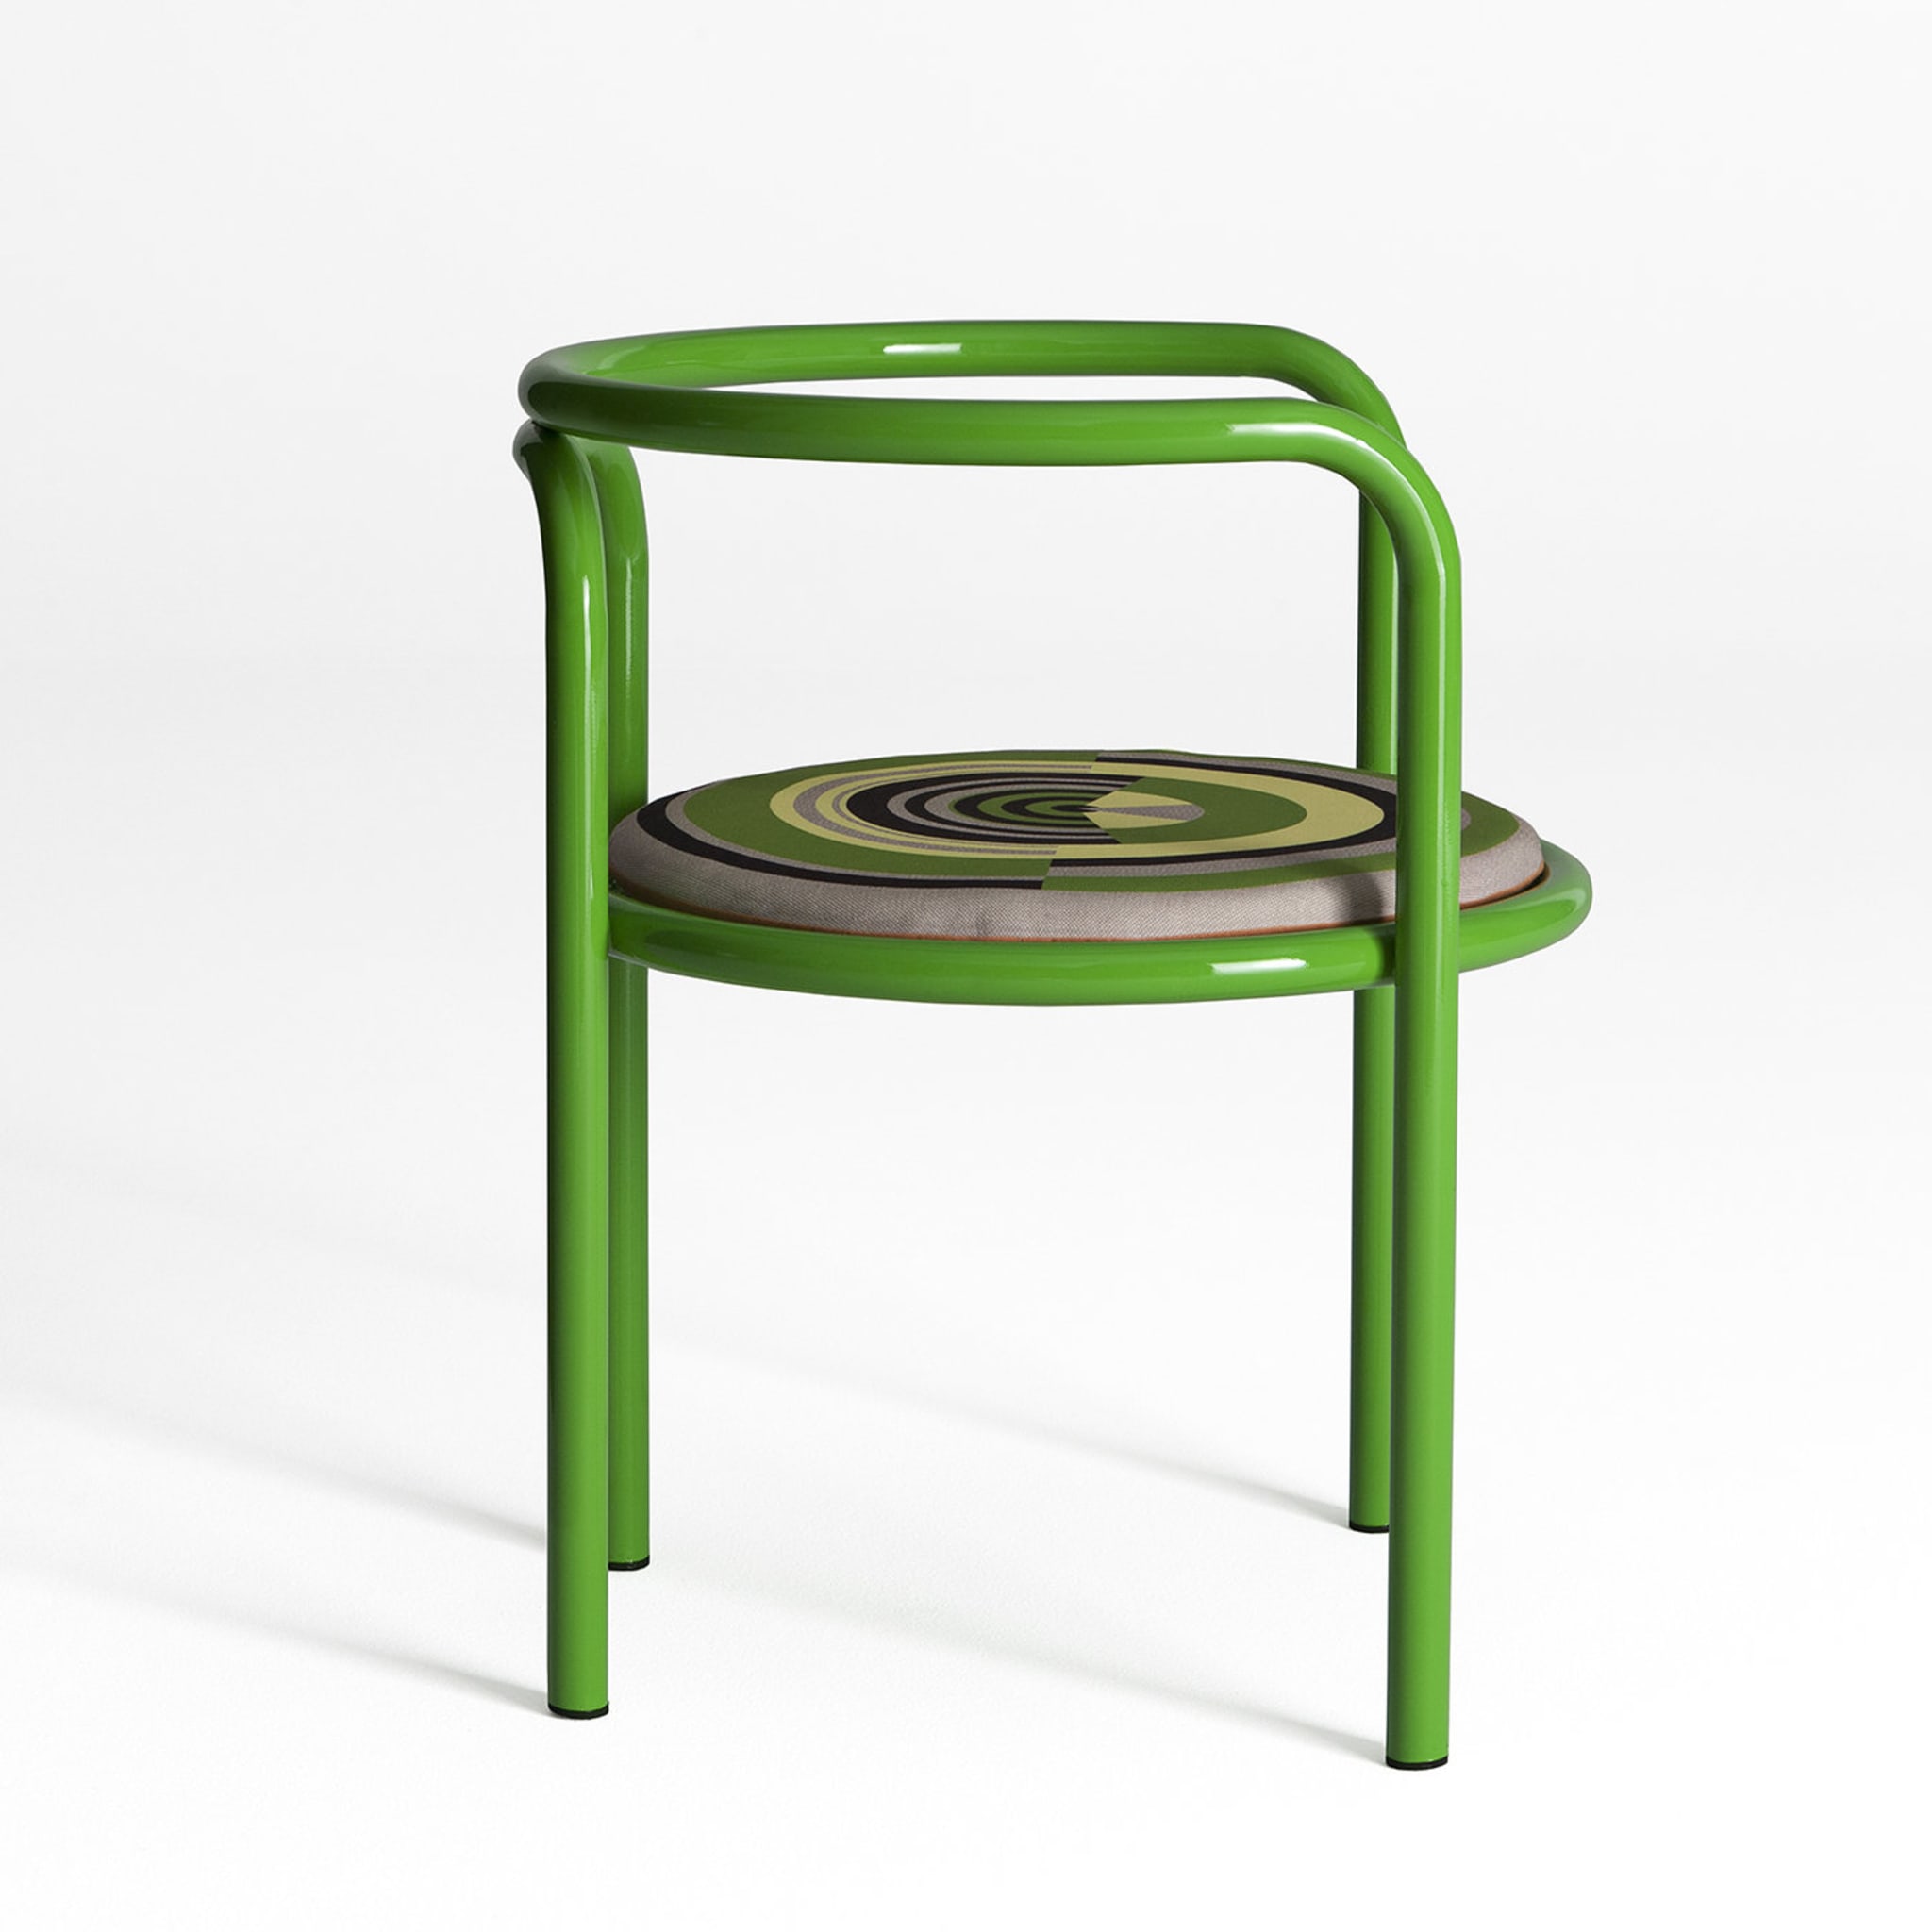 Locus Solus Green Chair by Gae Aulenti - Alternative view 1